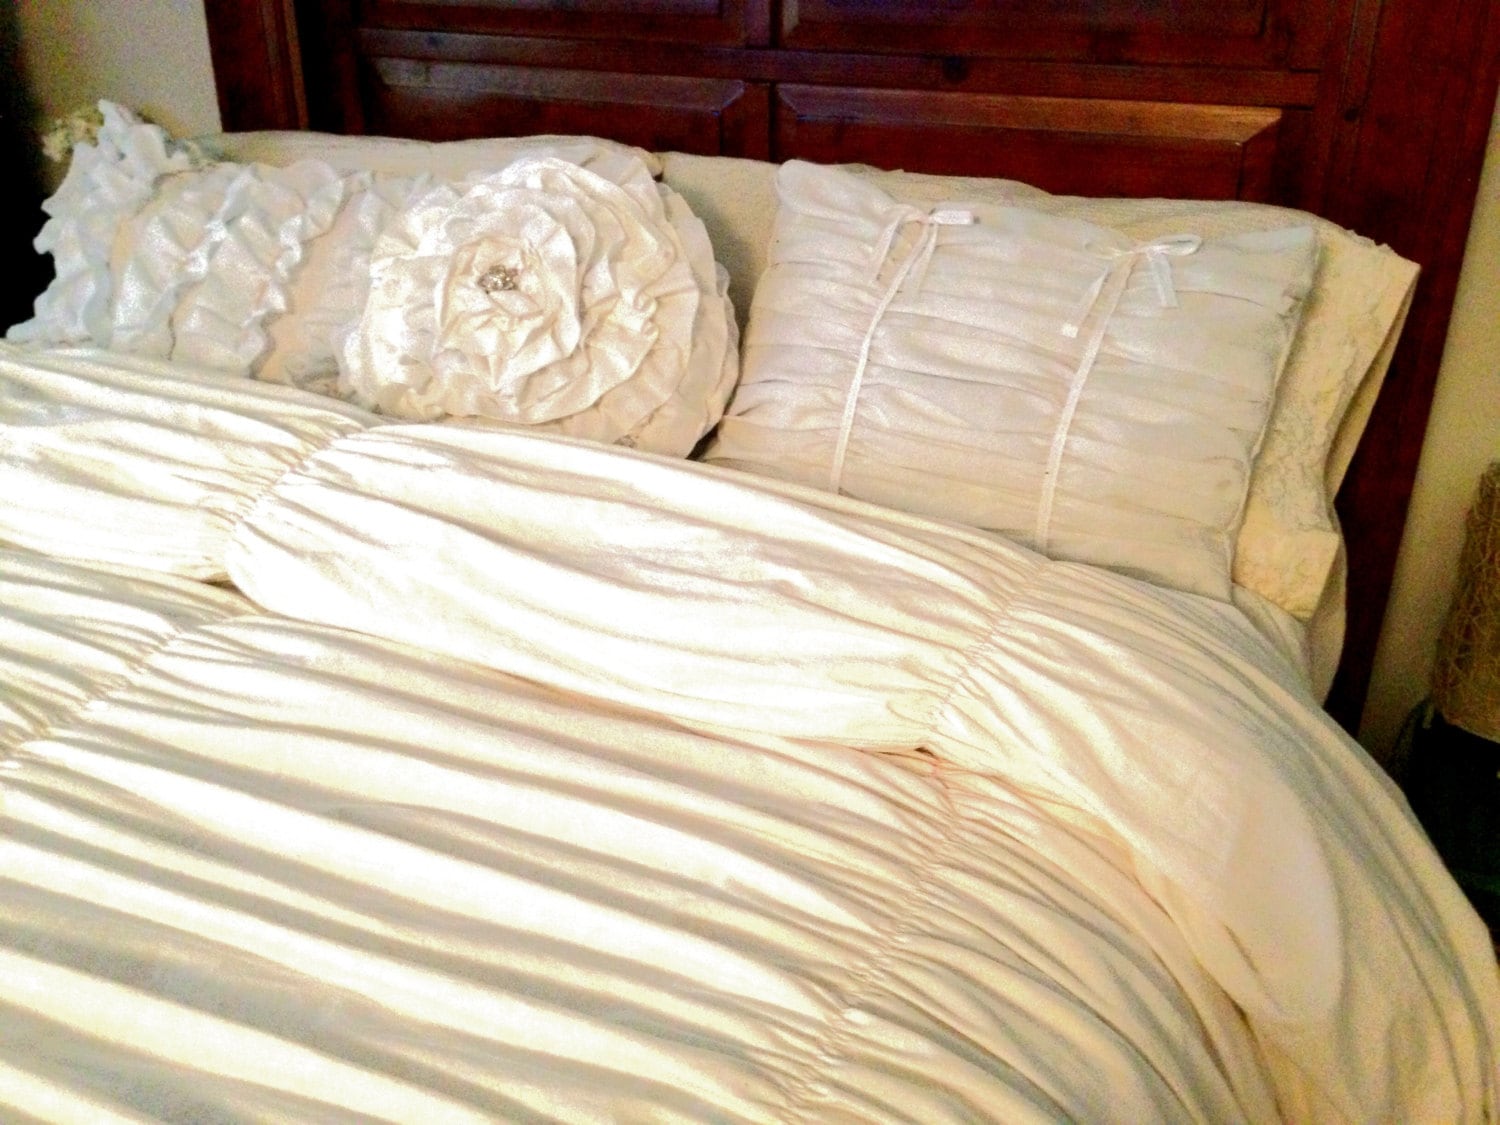 Popular items for shabby chic bedding on Etsy